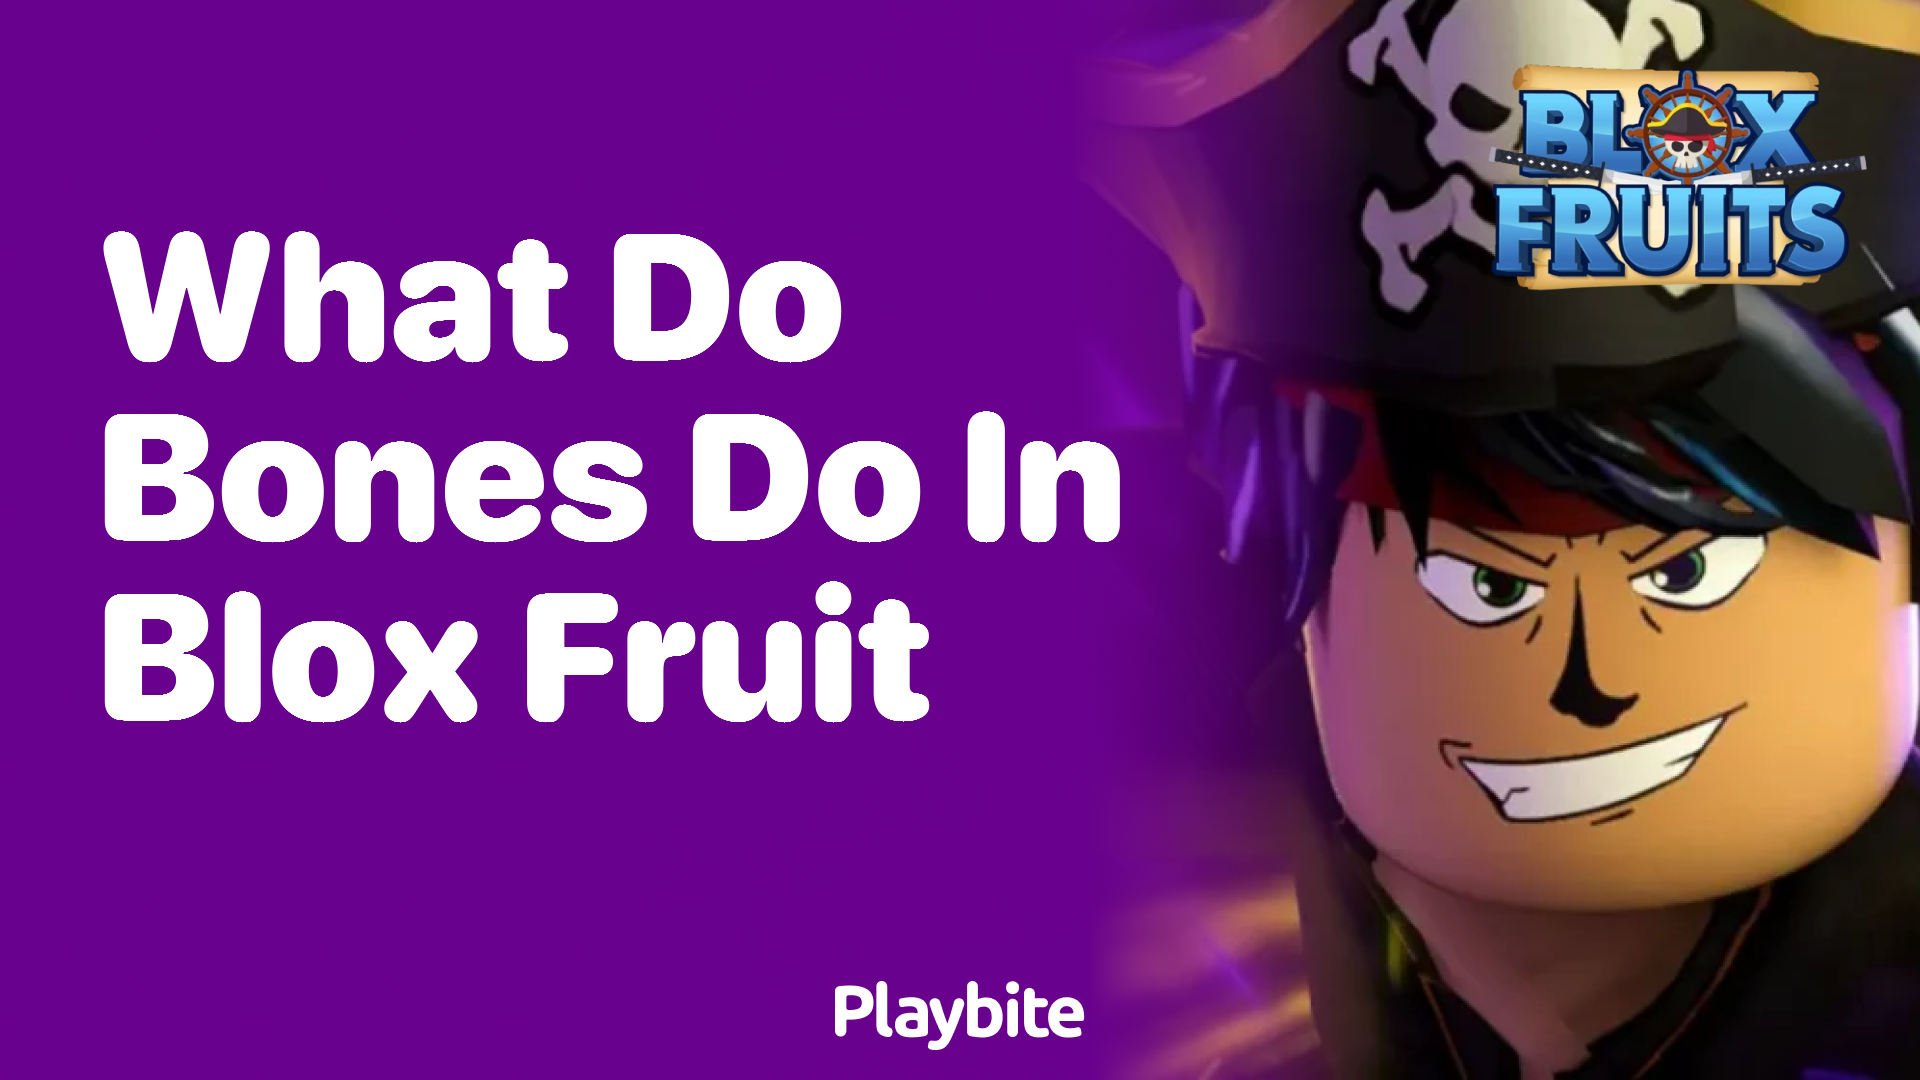 What Do Bones Do in Blox Fruit?